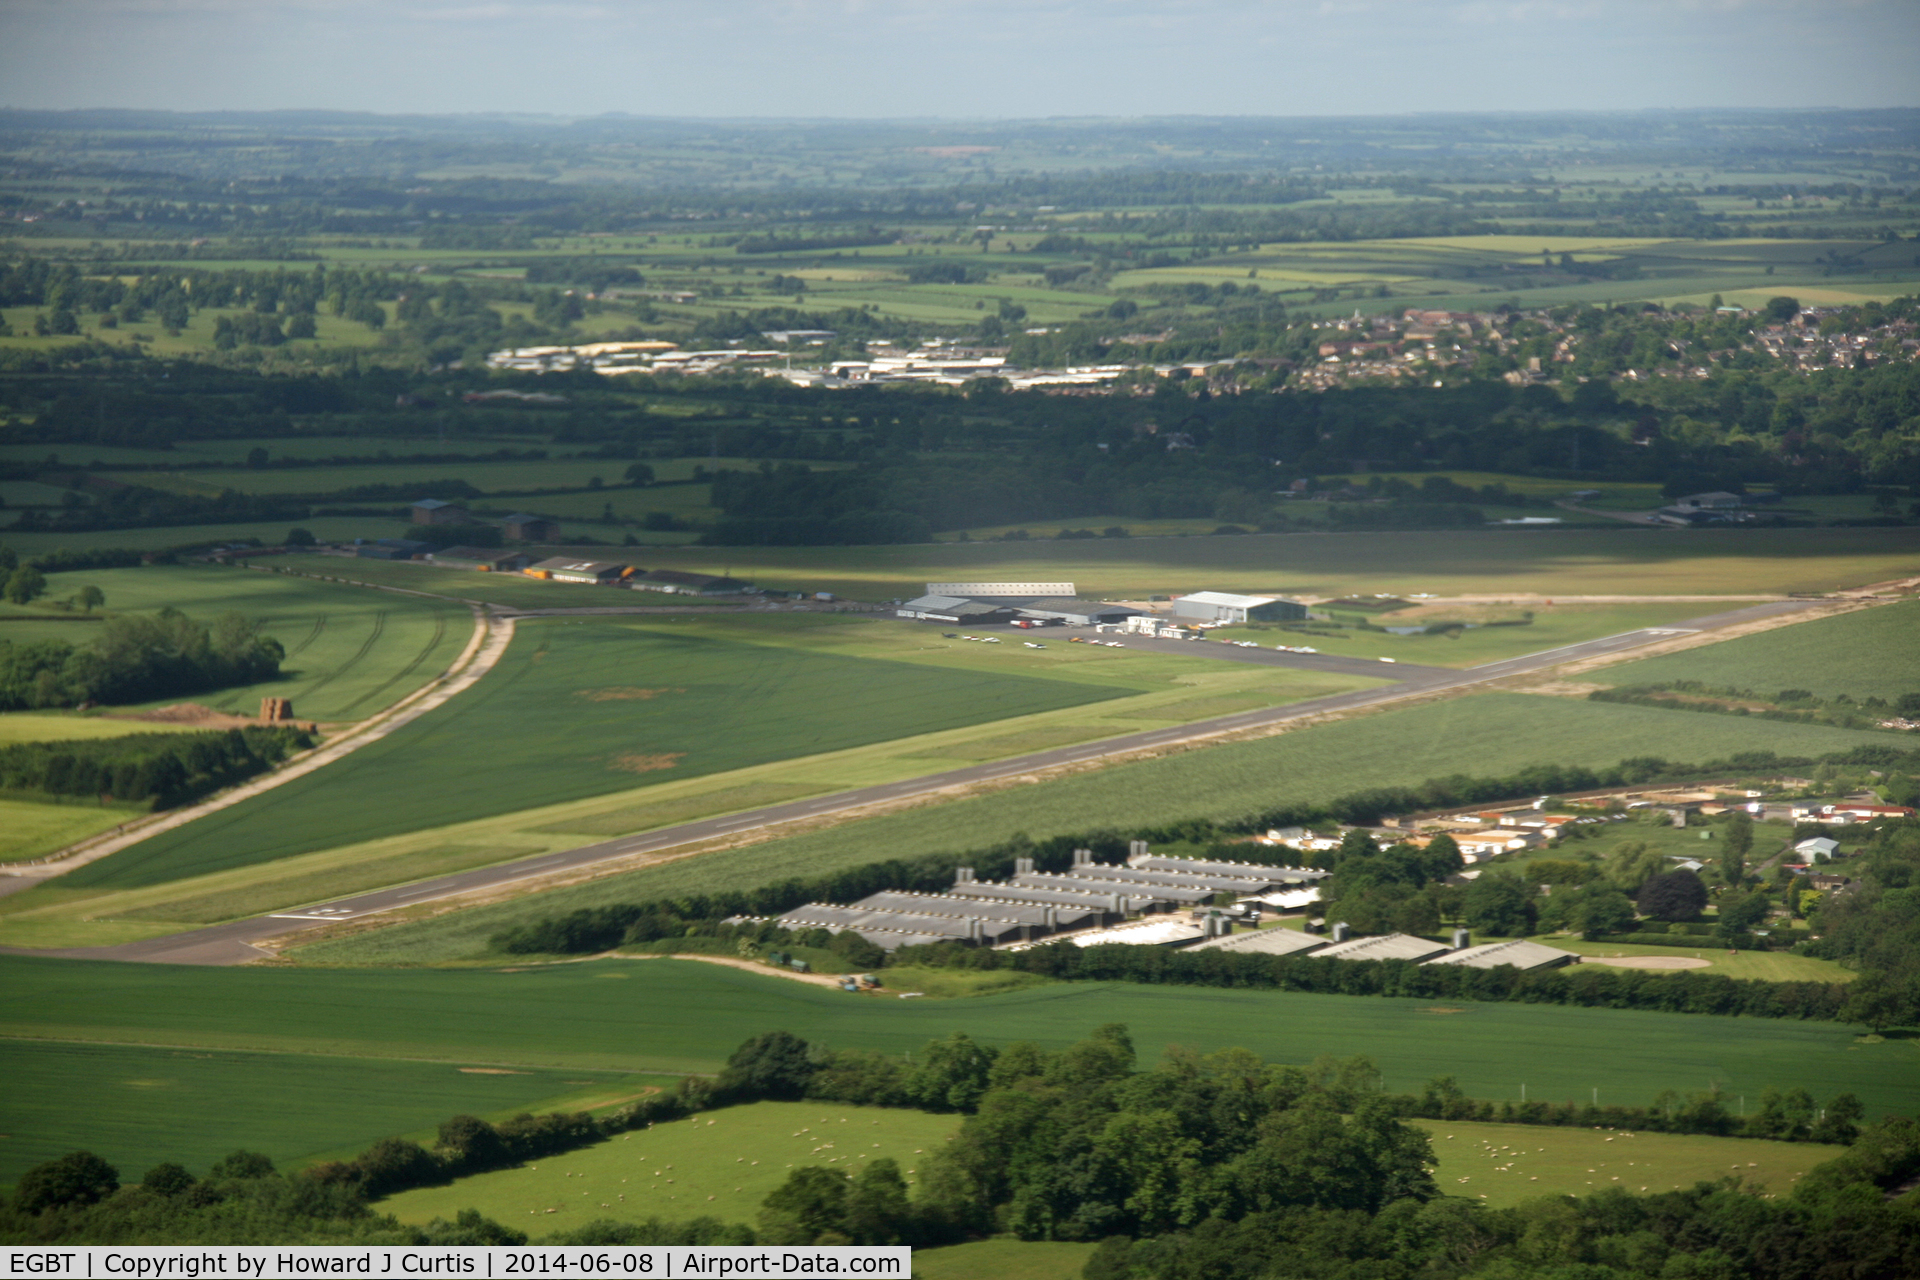 Turweston Aerodrome Airport, Turweston, England United Kingdom (EGBT) - Turweston, as seen from Bulldog G-GRRR.